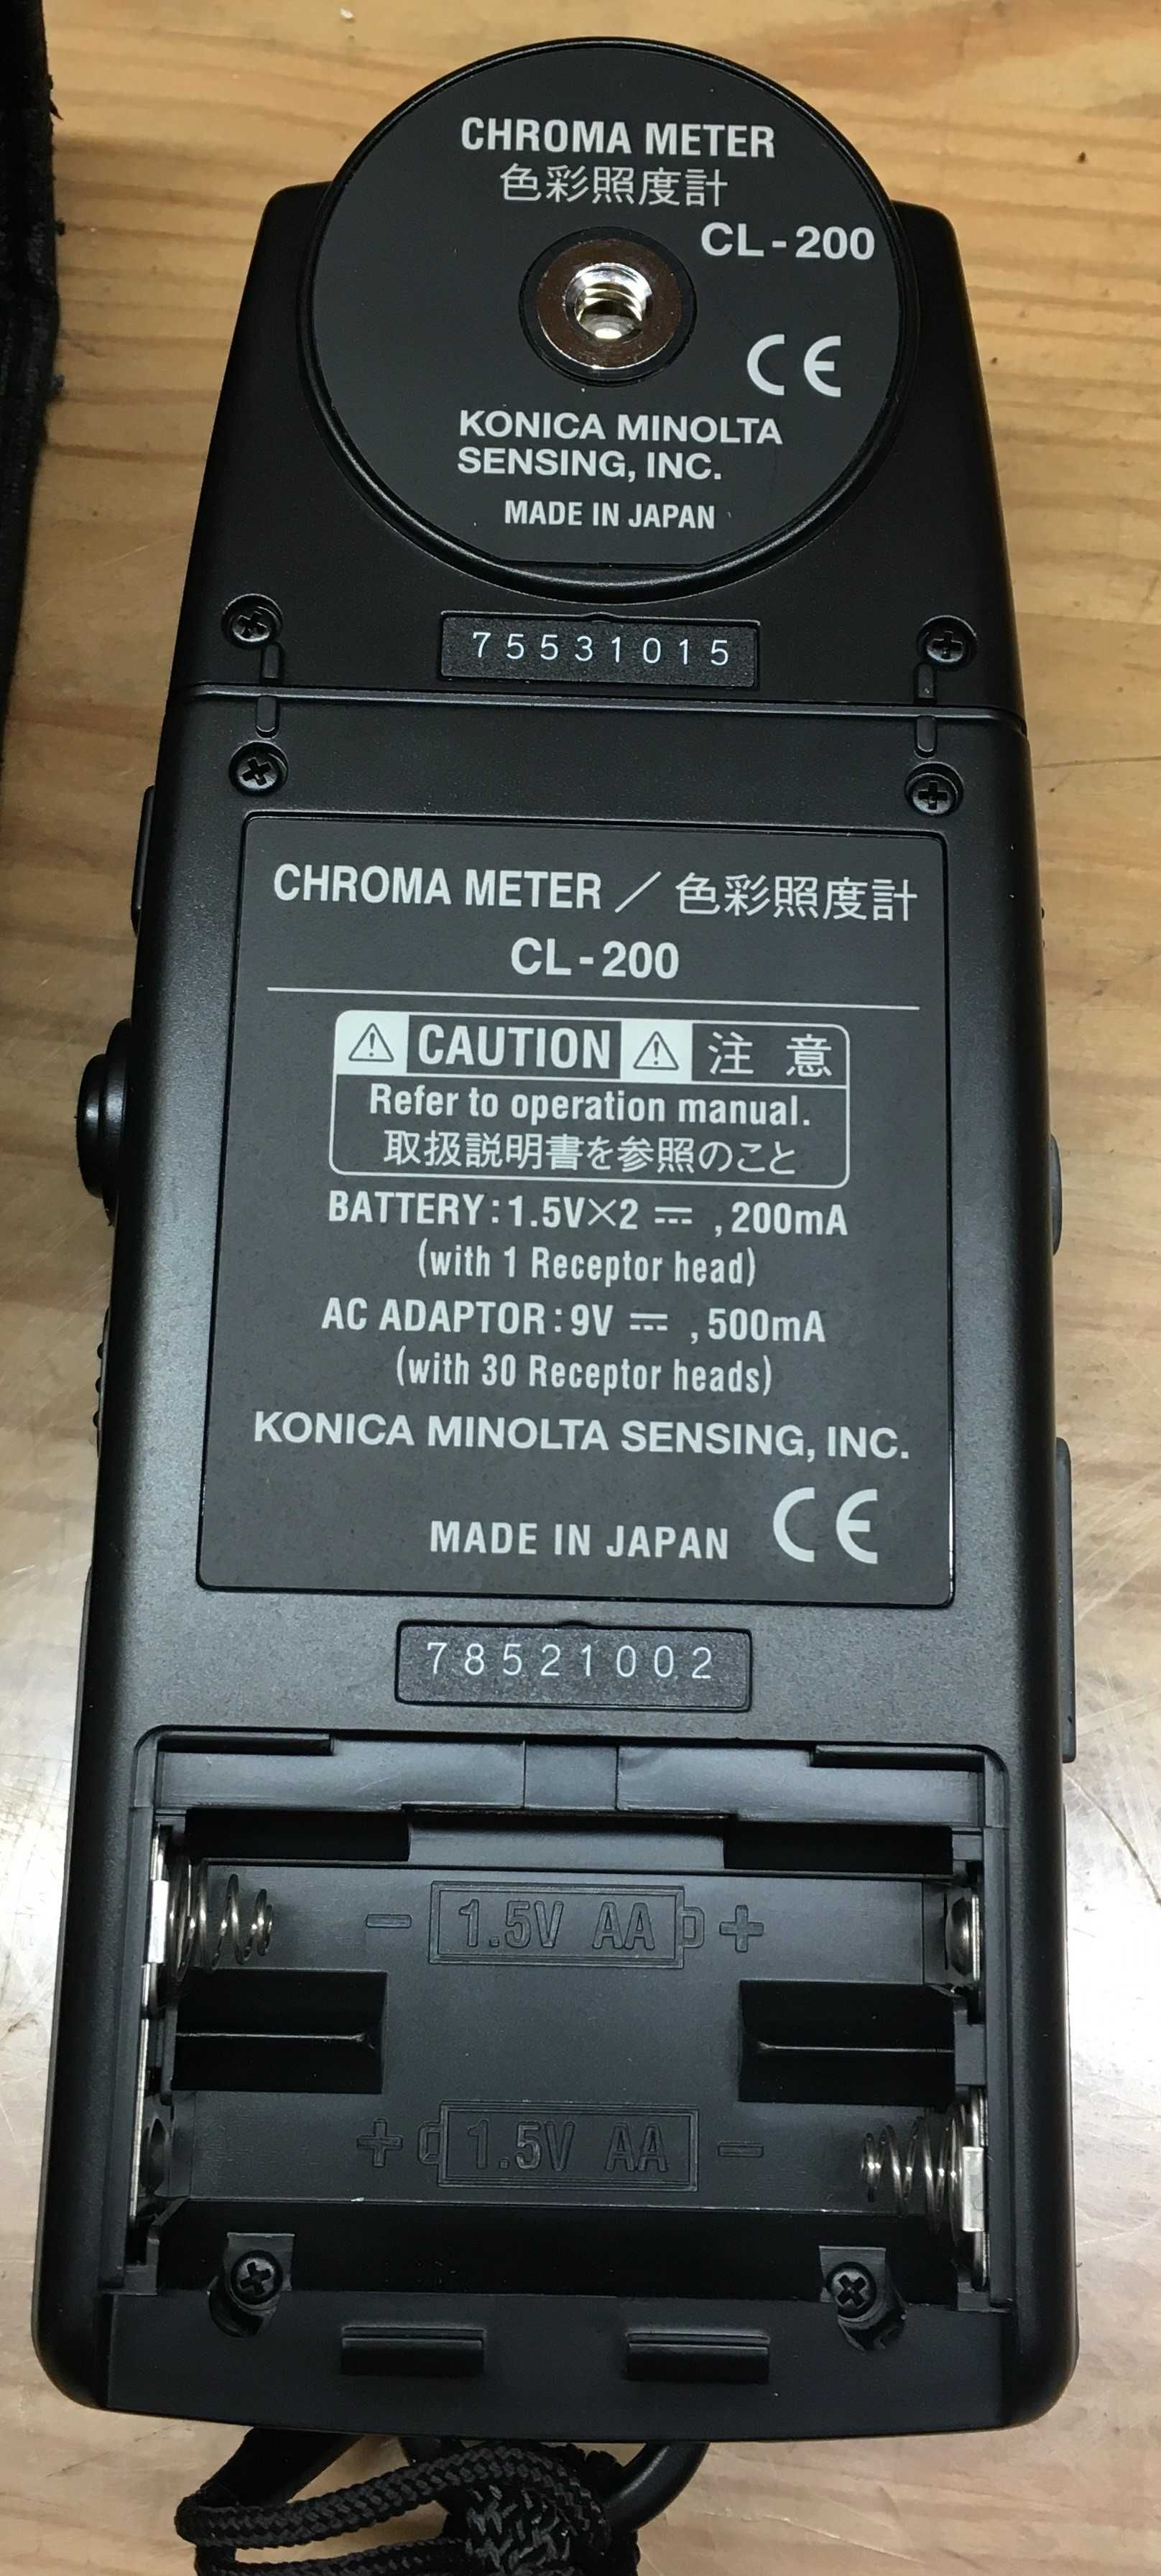 Konica Minolta Chroma Meter CL-200